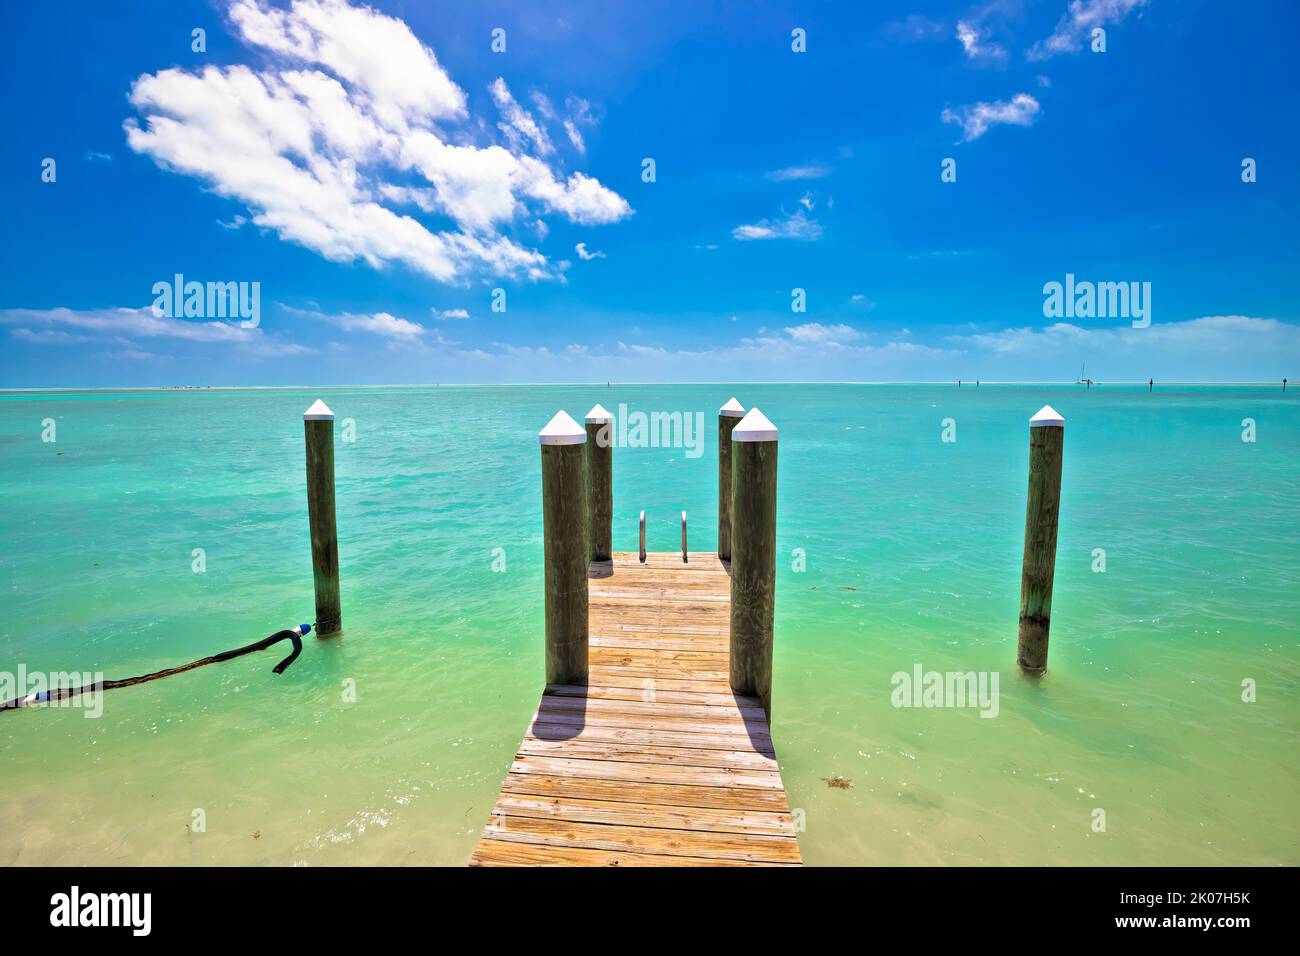 Idyllic turquoise bay and wooden dock in Islamorada on Florida Keys, Florida states of USA Stock Photo